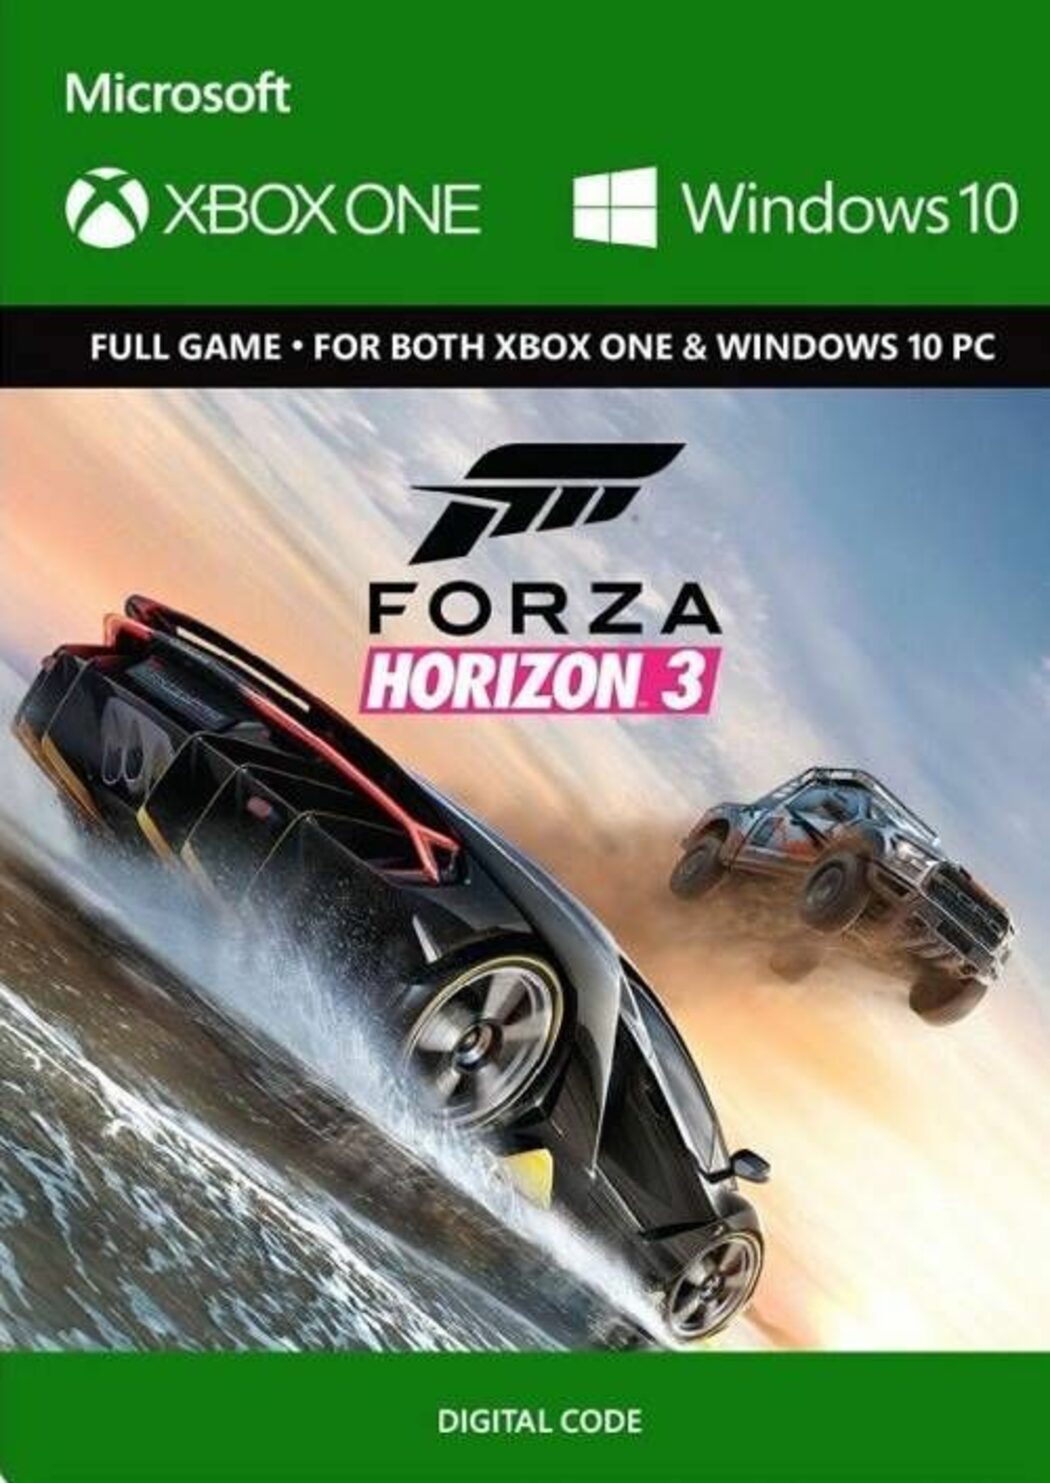 Buy cheap Forza Horizon 5 - Horizon Racing Car Pack cd key - lowest price